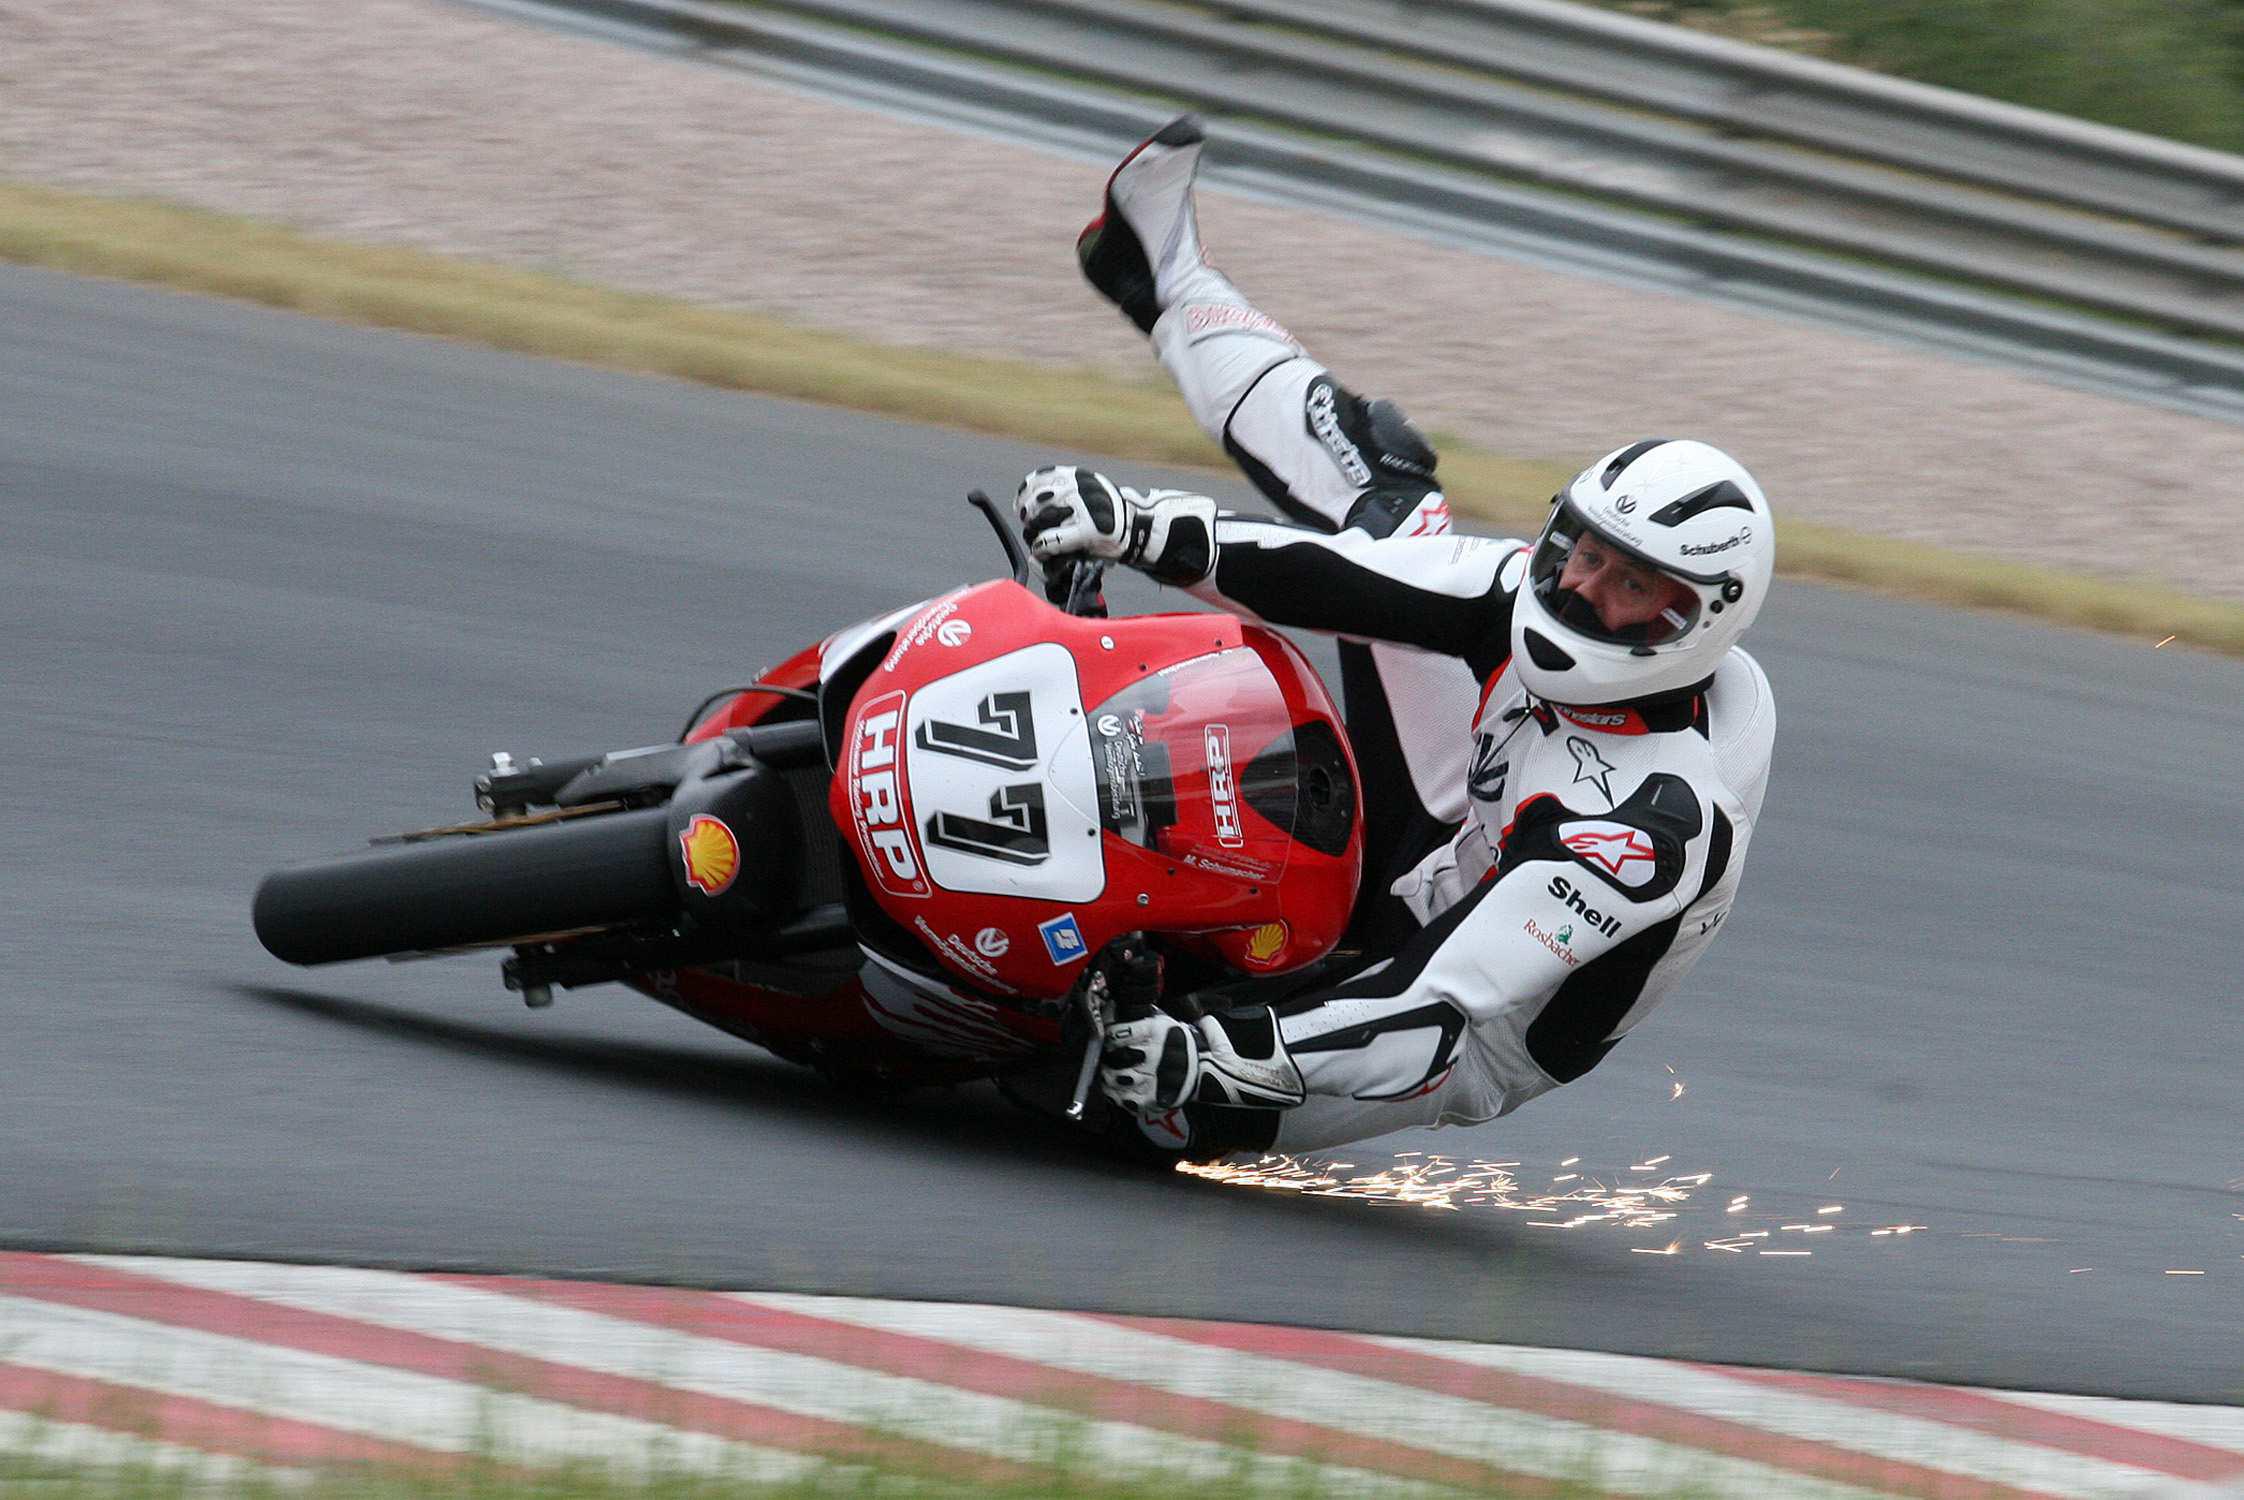 Incidente in moto nel 2008 senza conseguenze (Infophoto)